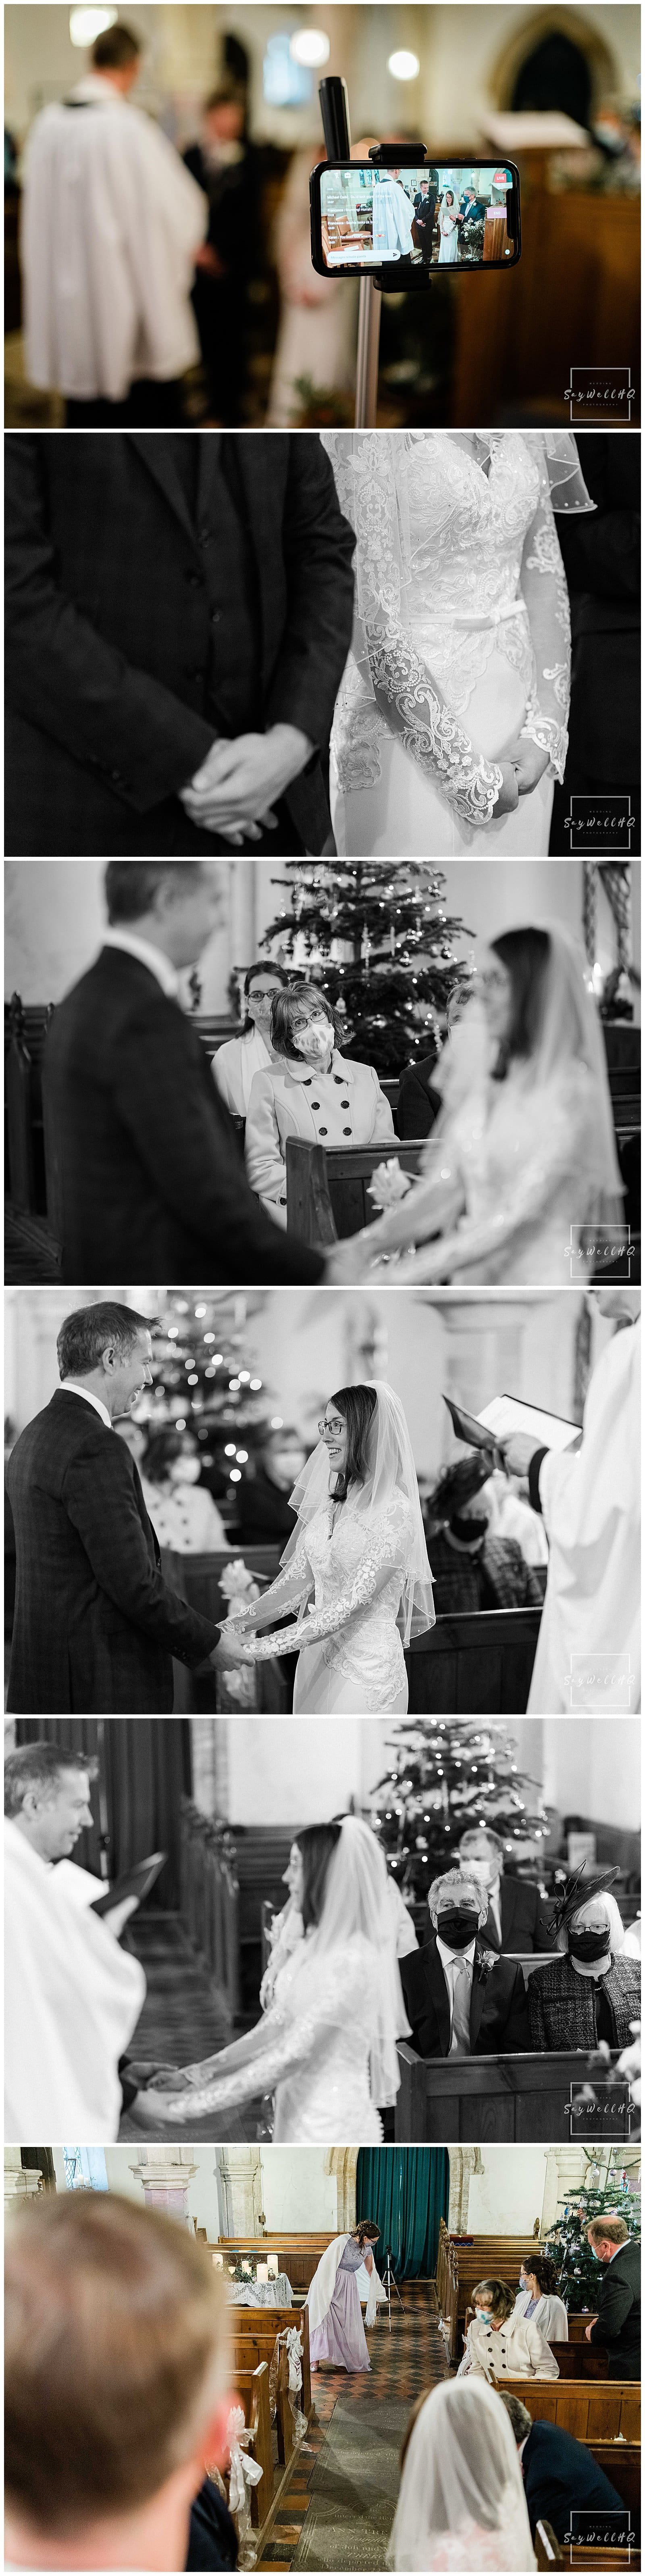 Vale-of-Belvoir-Wedding-Photography-by-Nottingham-wedding-photographer-Andy-Saywell_0010.jpg